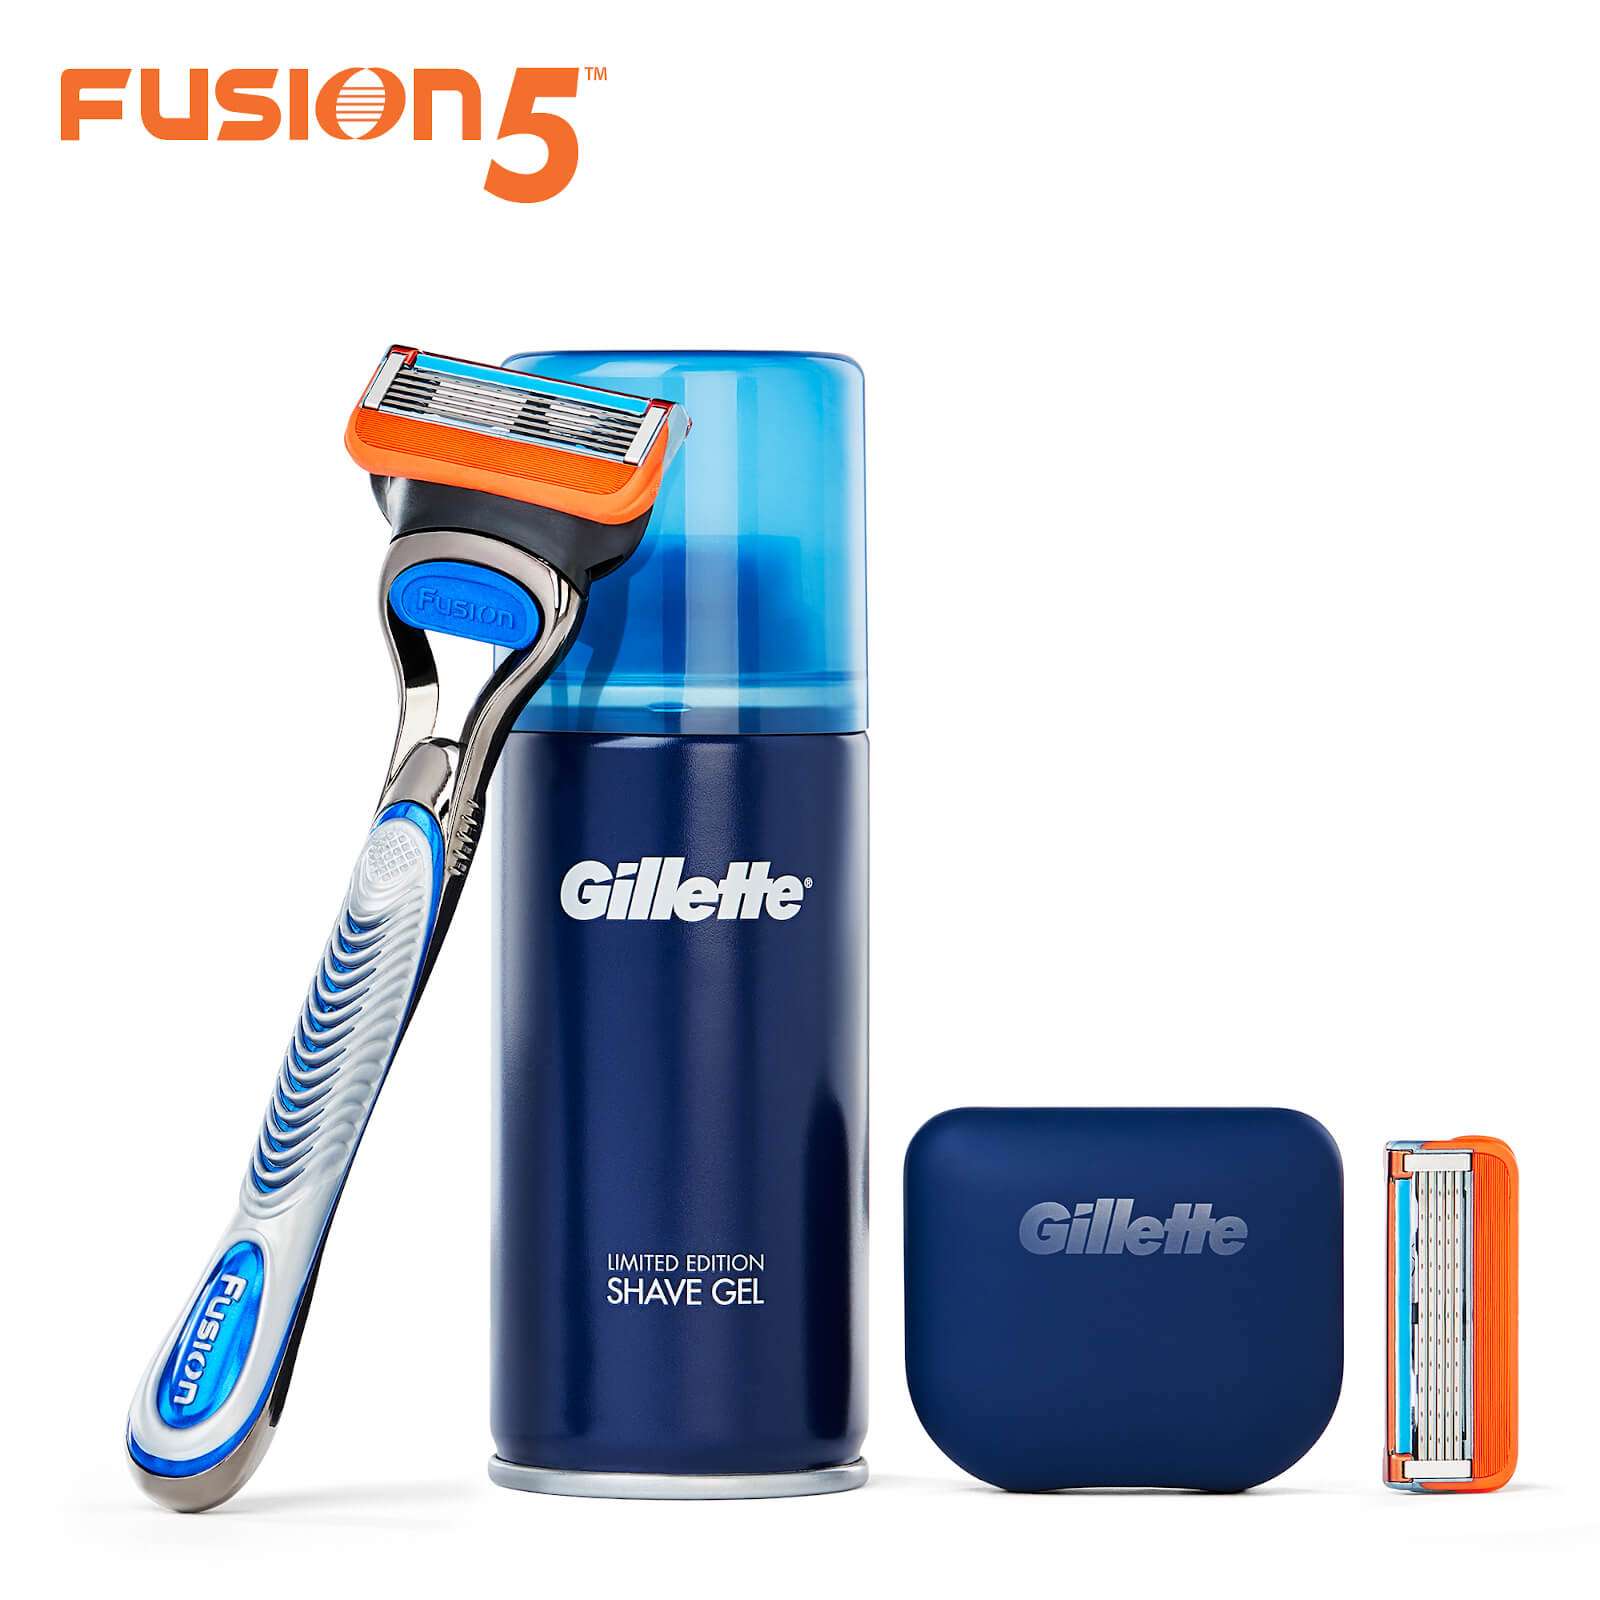 Gillette Fusion5 Starter Kit Subscription - Trial 1 - 3 Month Plan